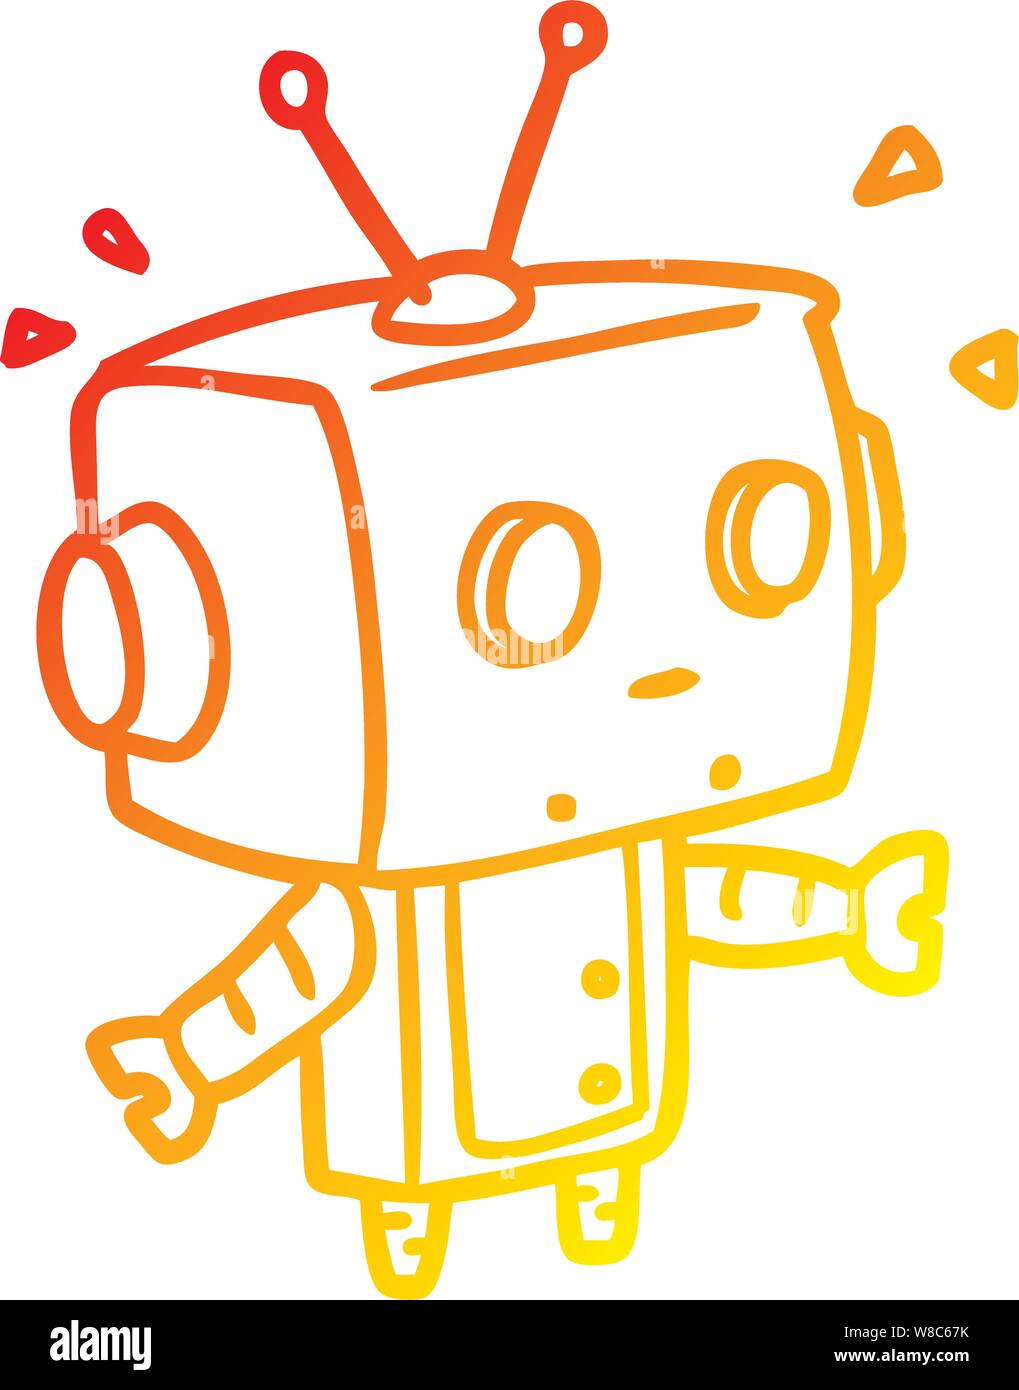 cute robot drawing